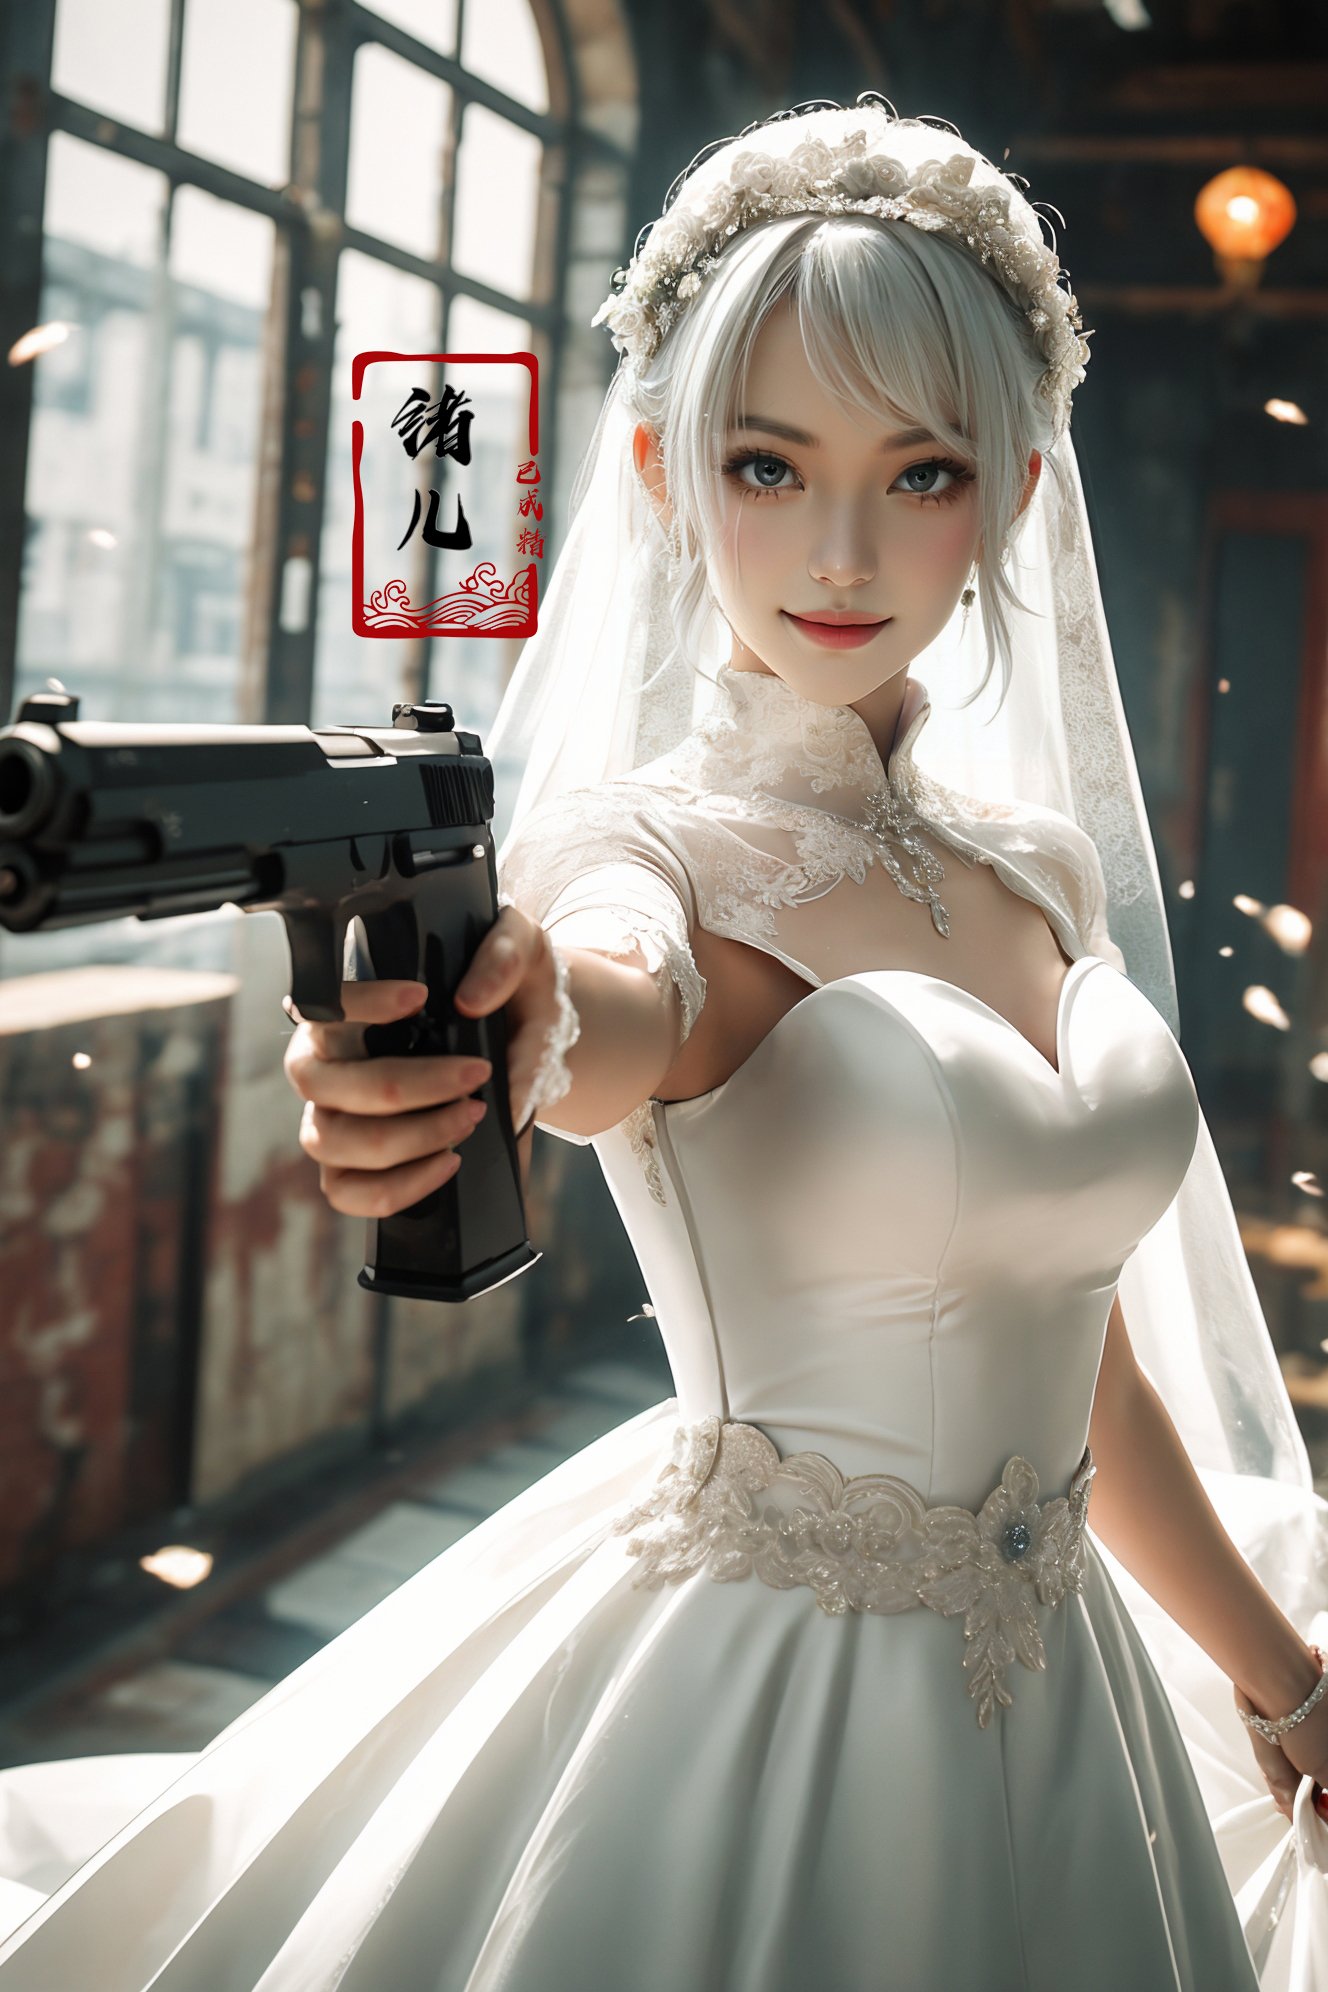 xuer pistol,  white hair,<lora:绪儿-手枪 xuer pistol:0.8>,evil smile,(wedding_dress:1.2),